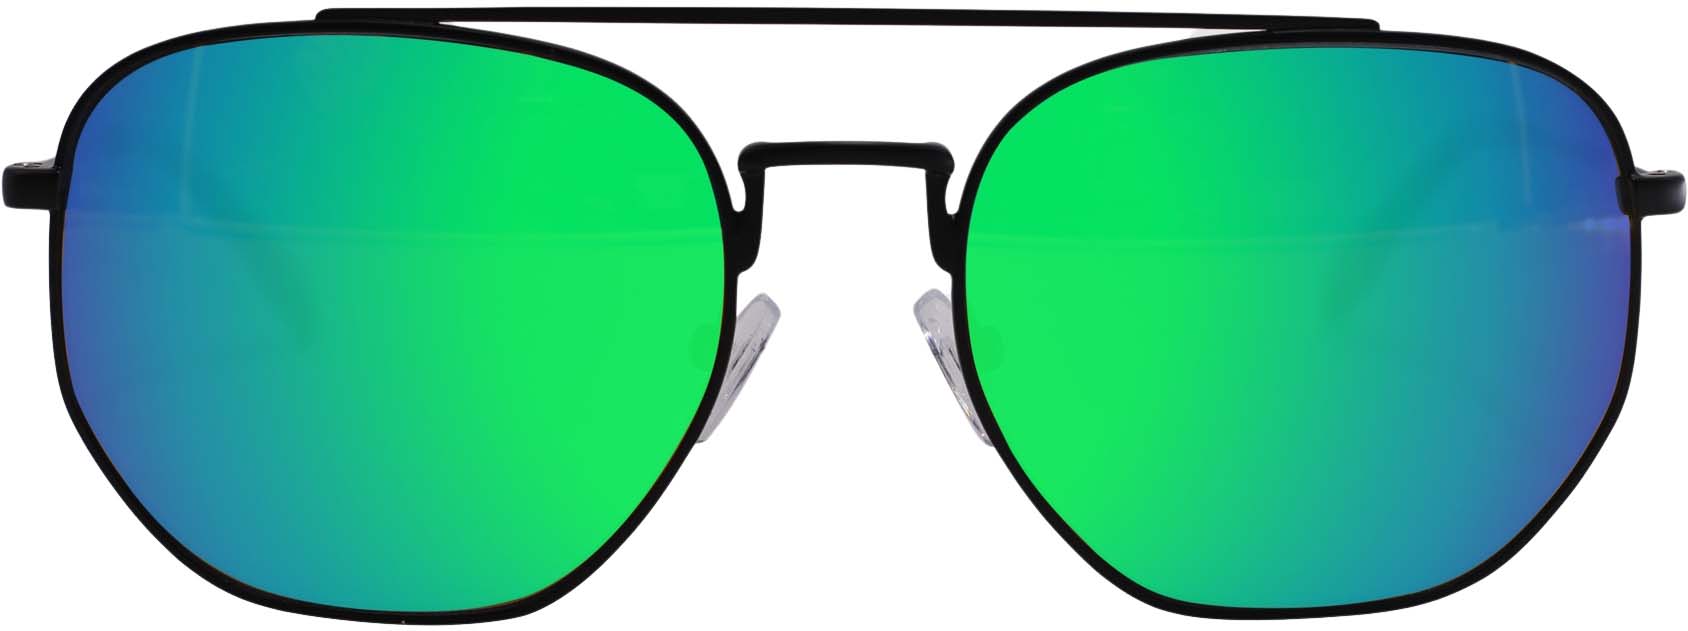 RLVNT Huron Series Sunglasses